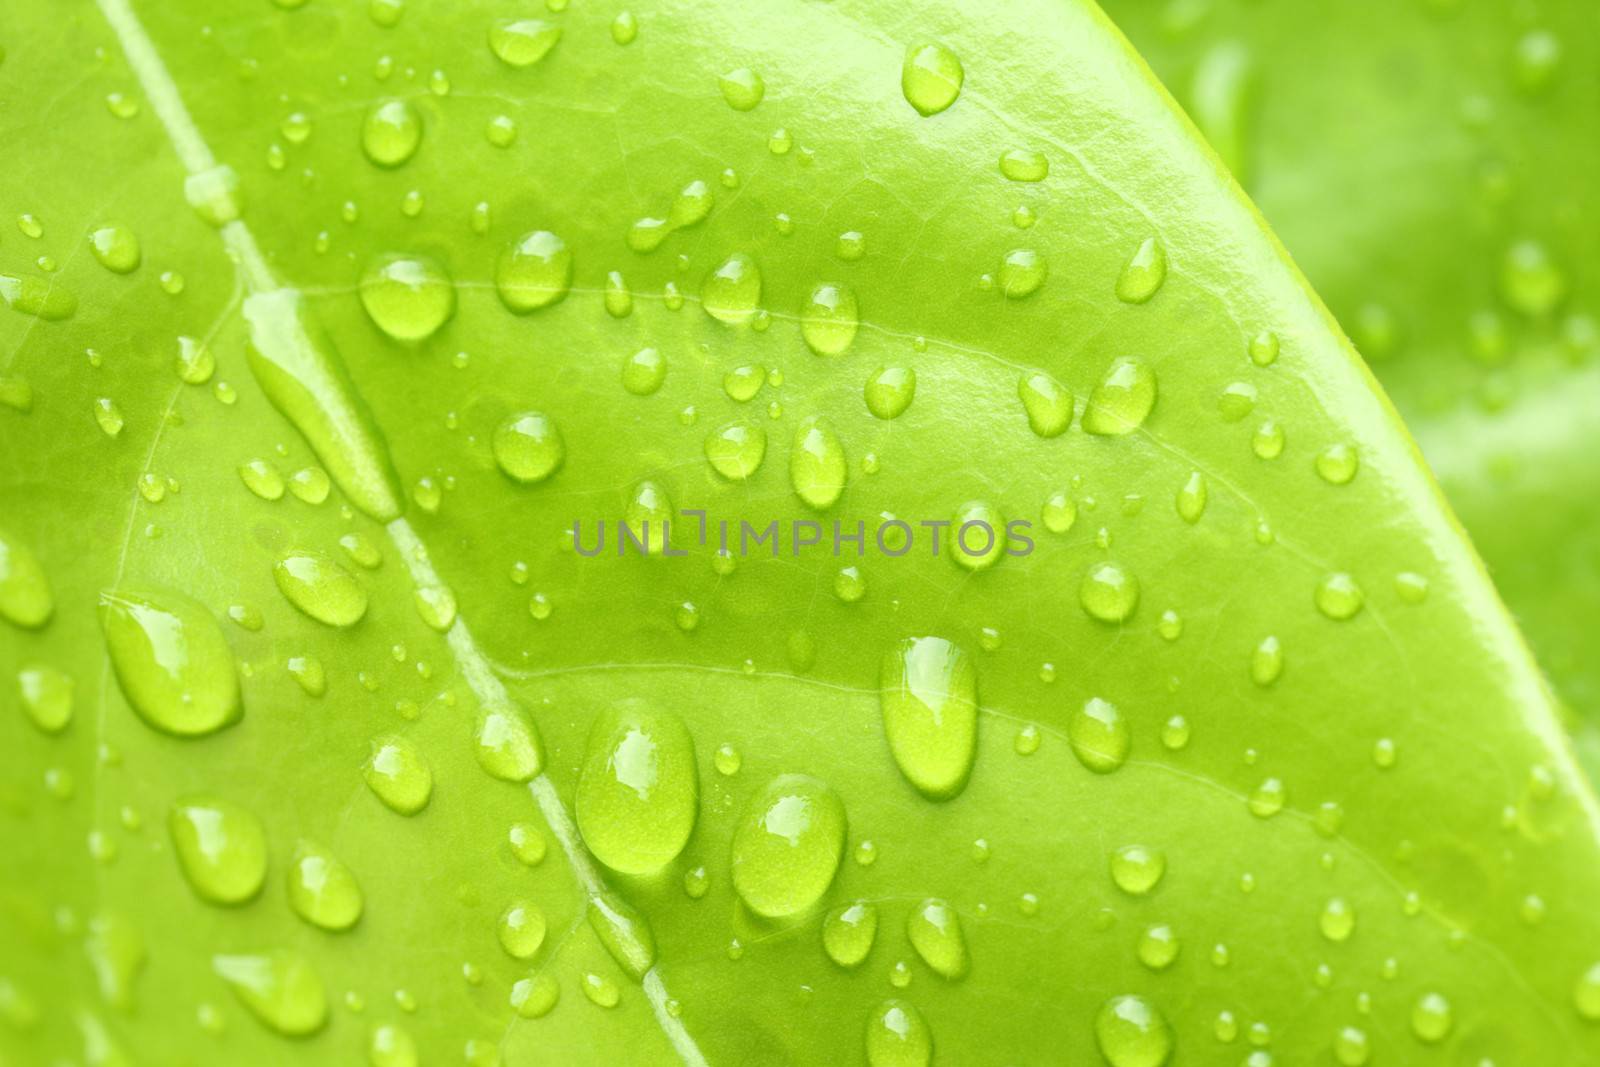 Water droplet on green leaf for freshness feeling